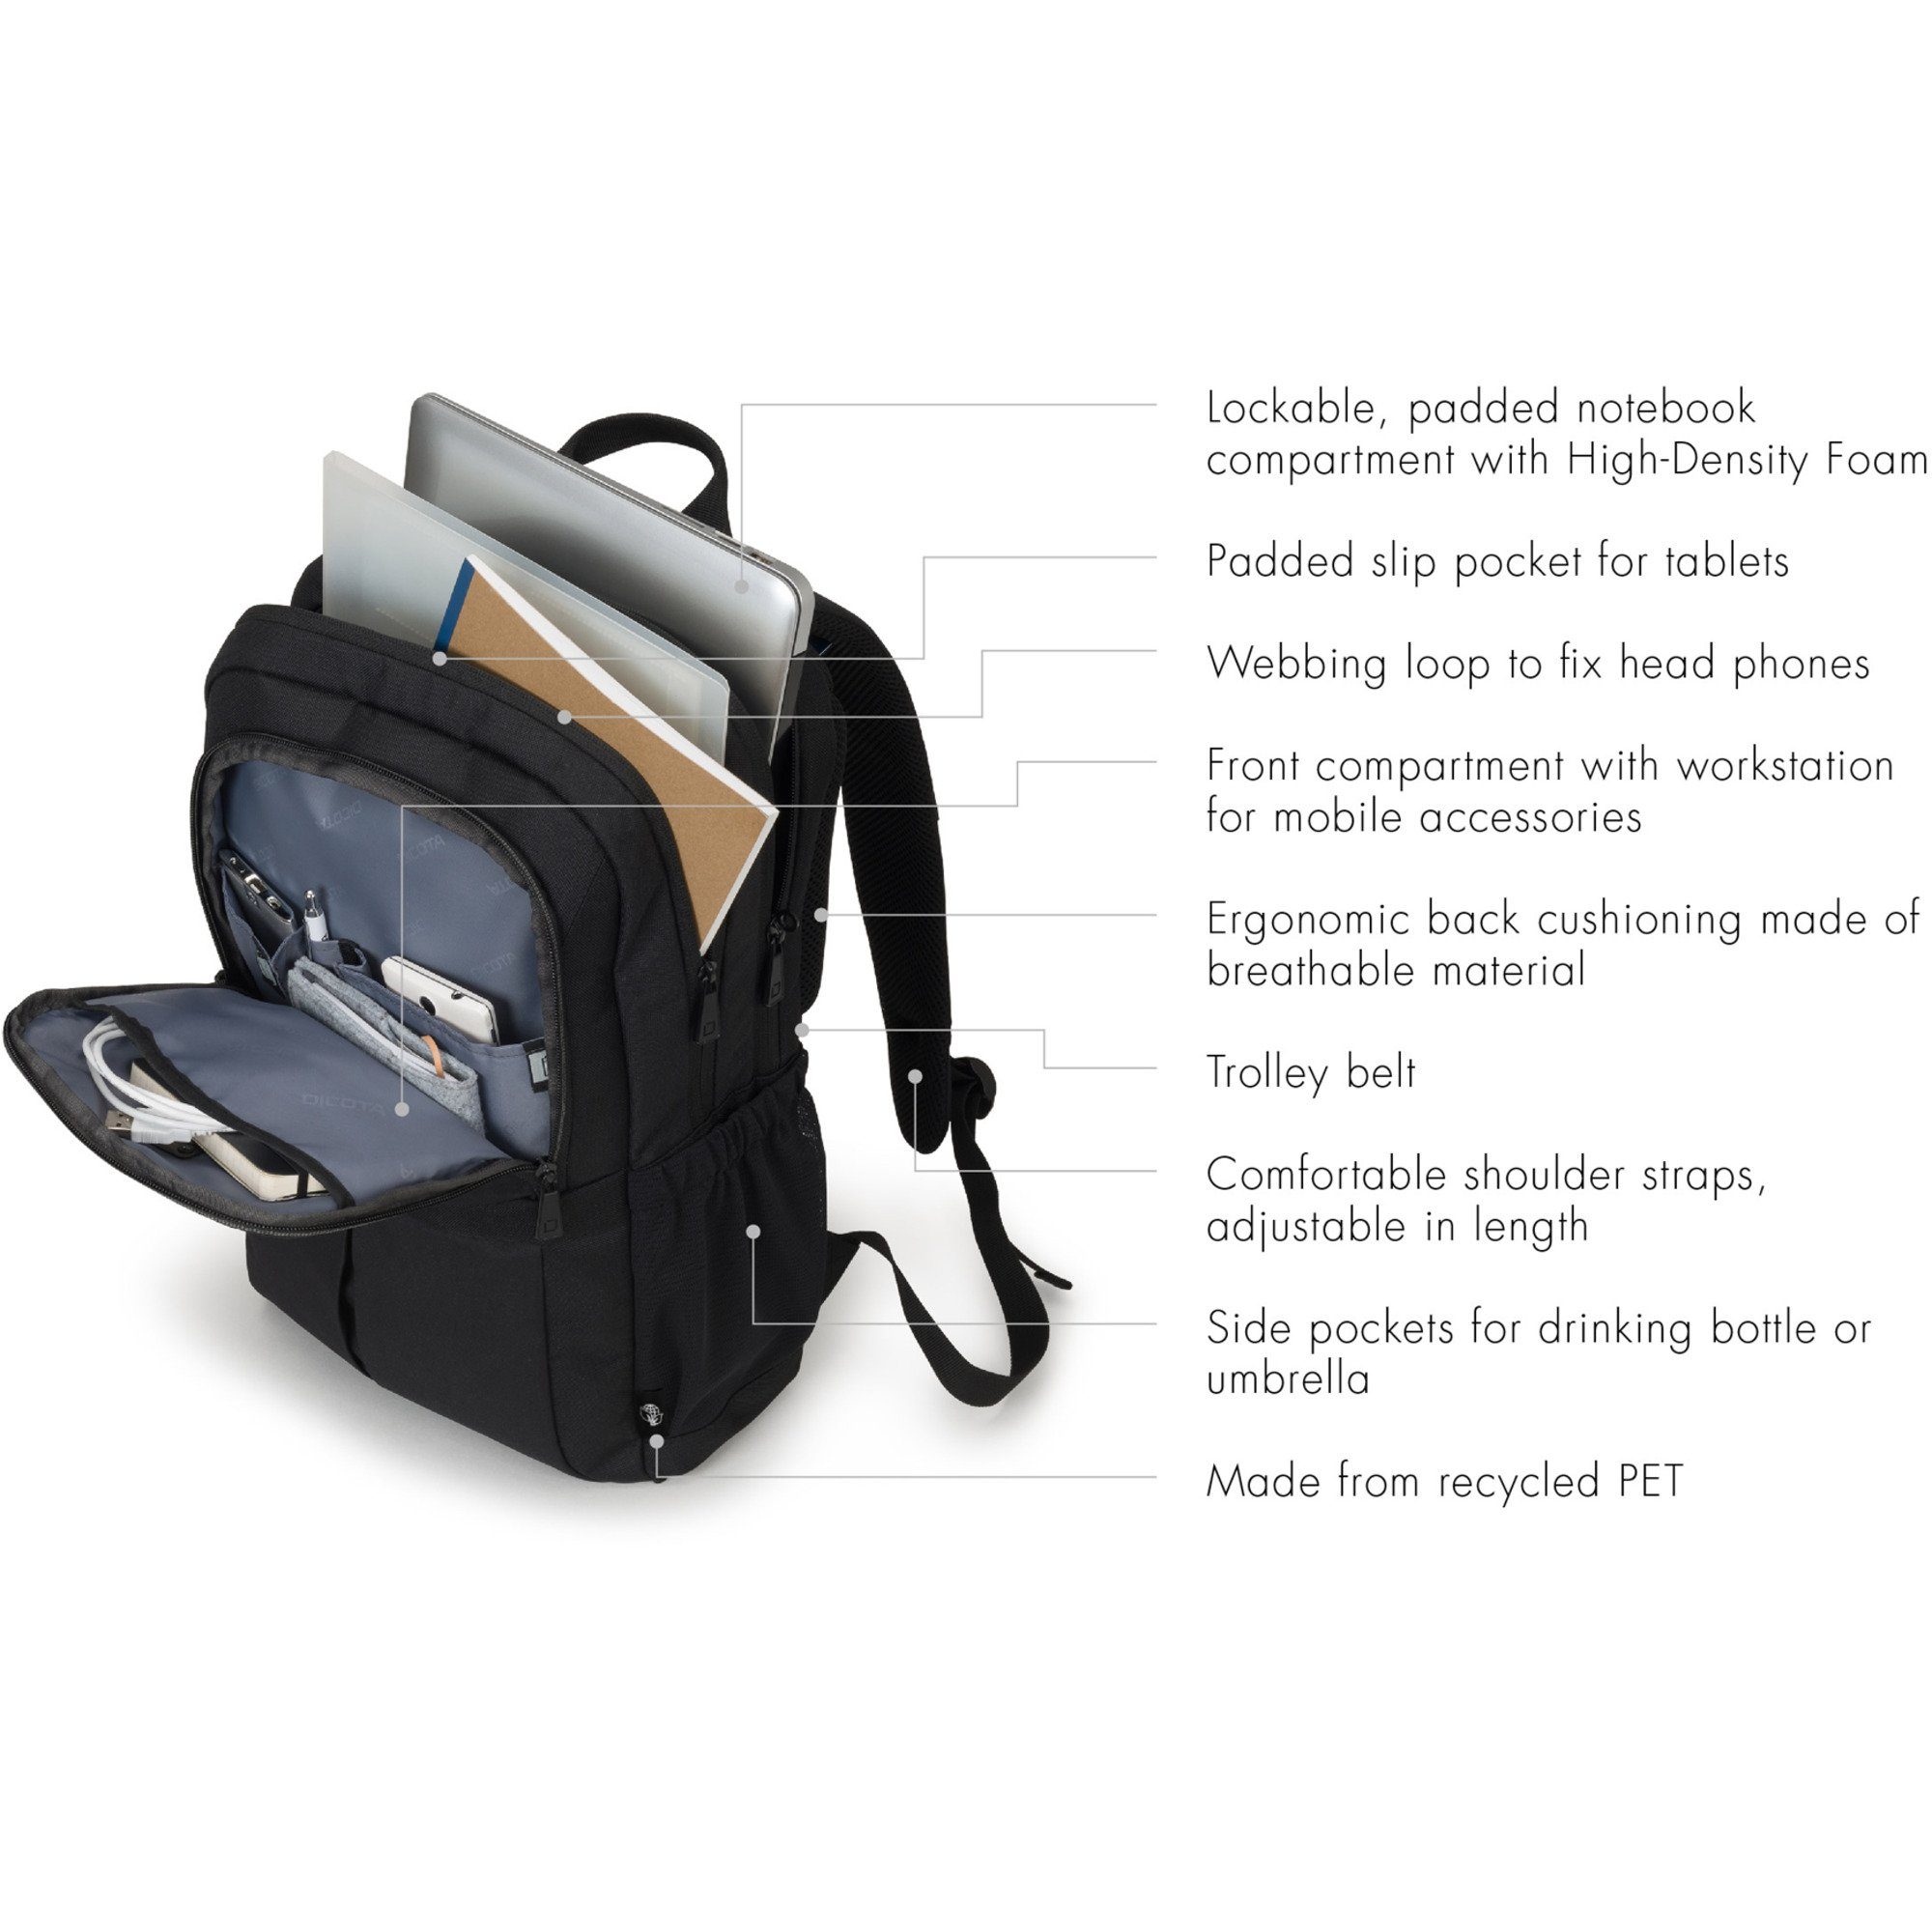 DICOTA Laptoptasche DICOTA Backpack SCALE, cm 39,6 Eco Rucksack, (bis